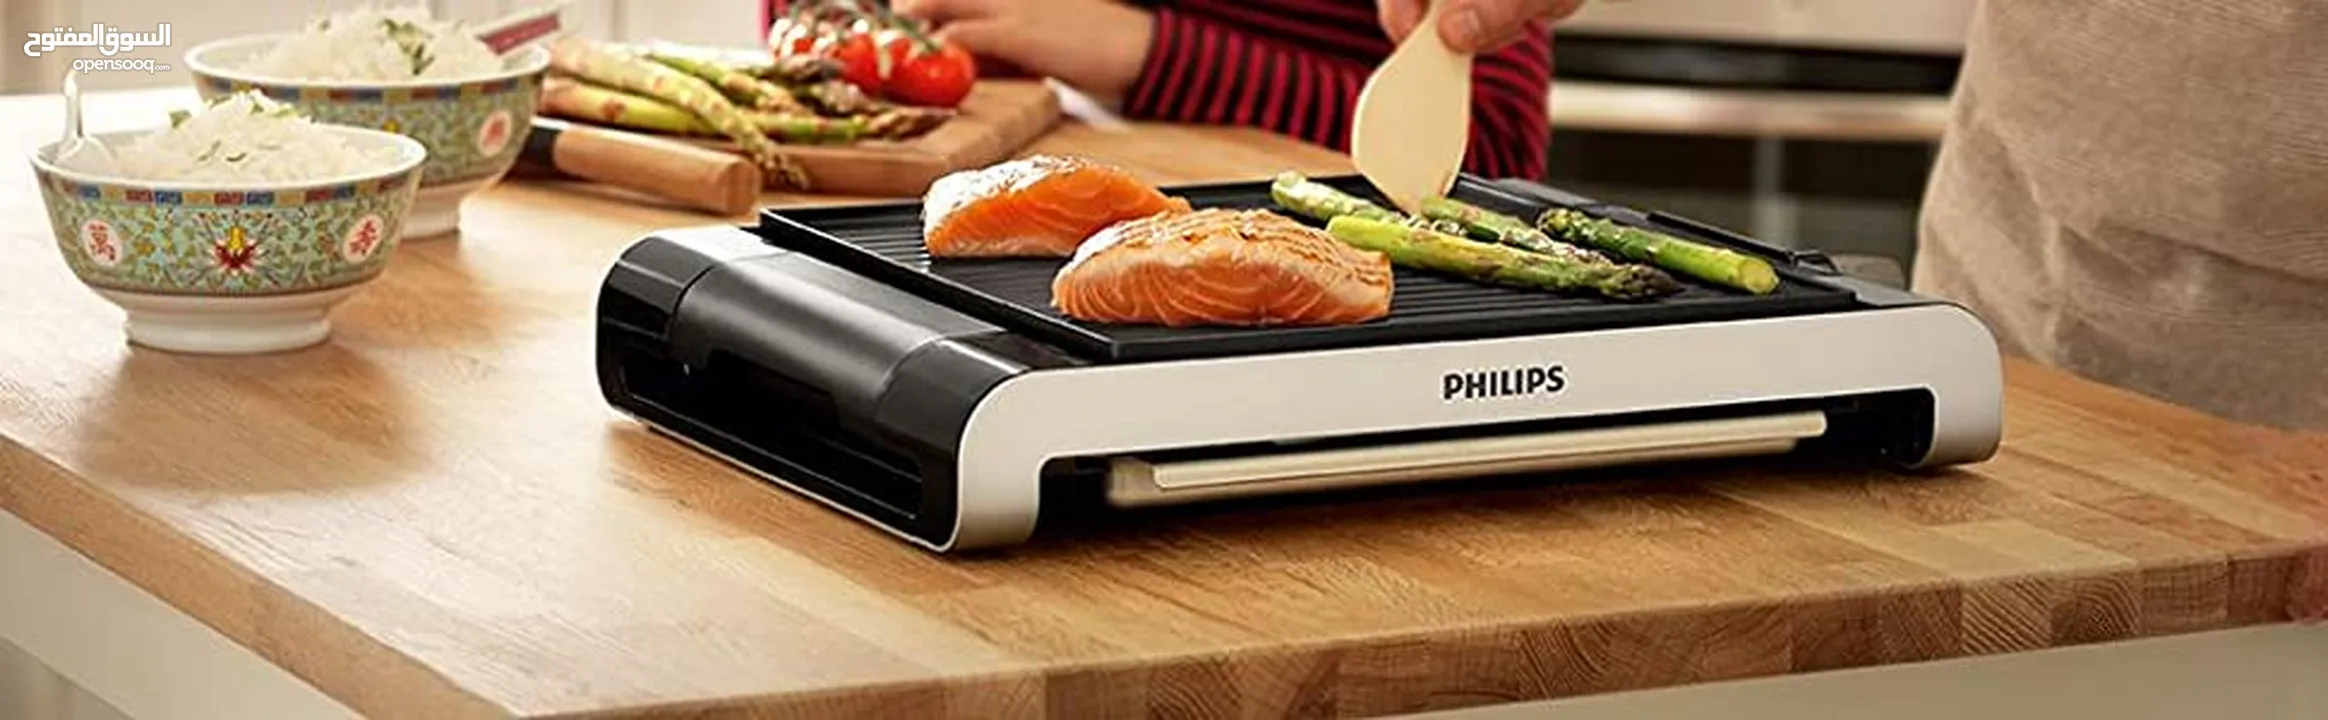 Philips Grills HD4419 FOR SALE جريل\شواية فيليبس للبيع